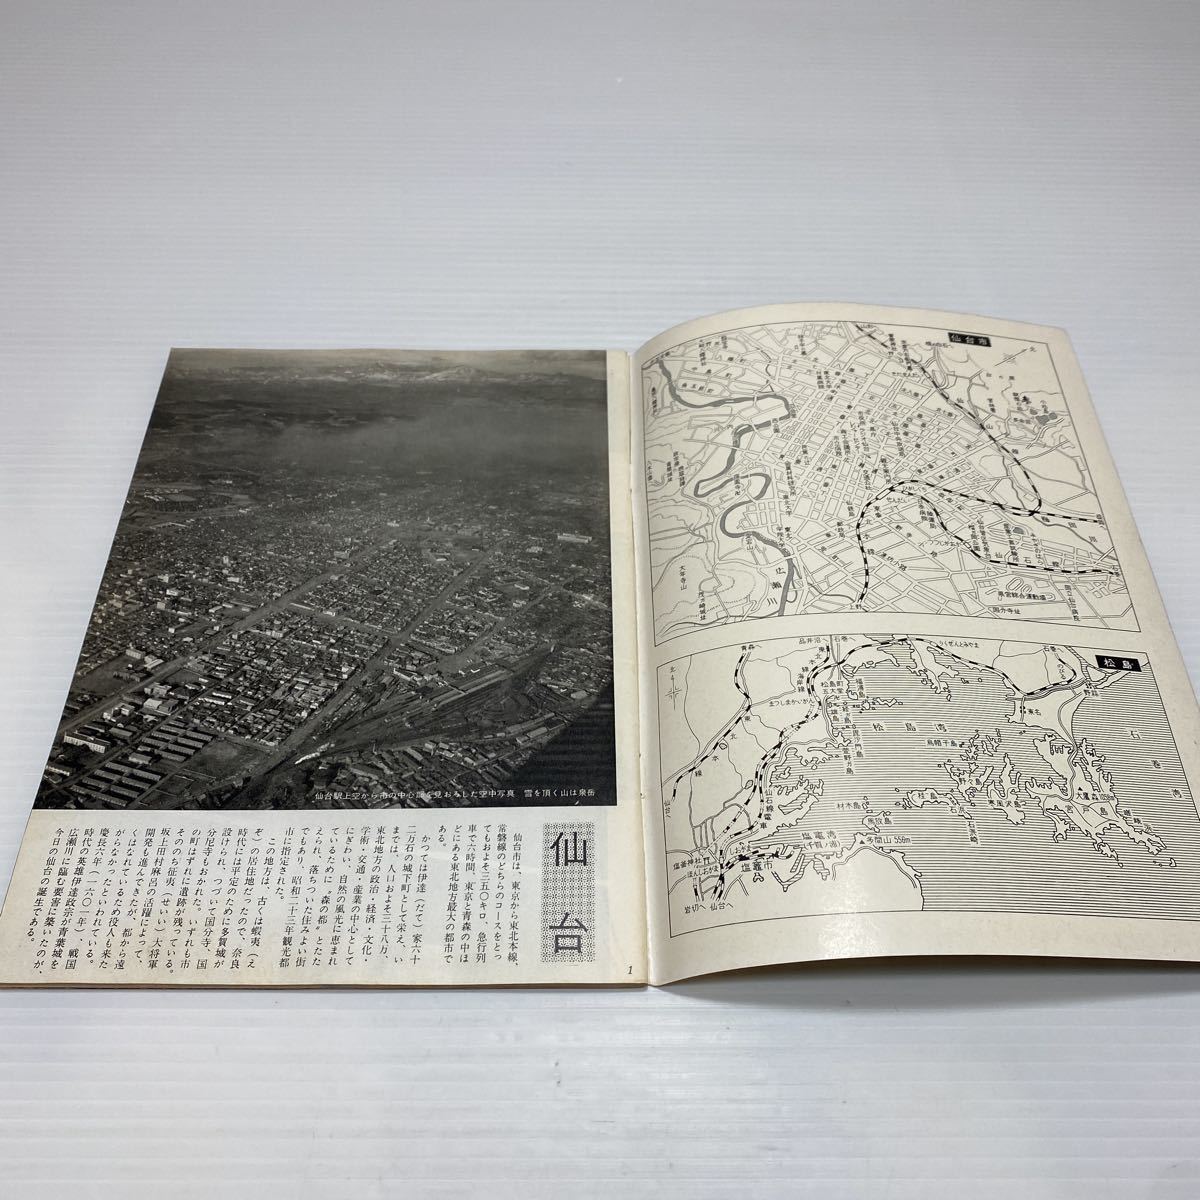 z5/ Asahi photograph book 71 sendai * pine island morning day newspaper company Showa era 33 year Yu-Mail postage 180 jpy 